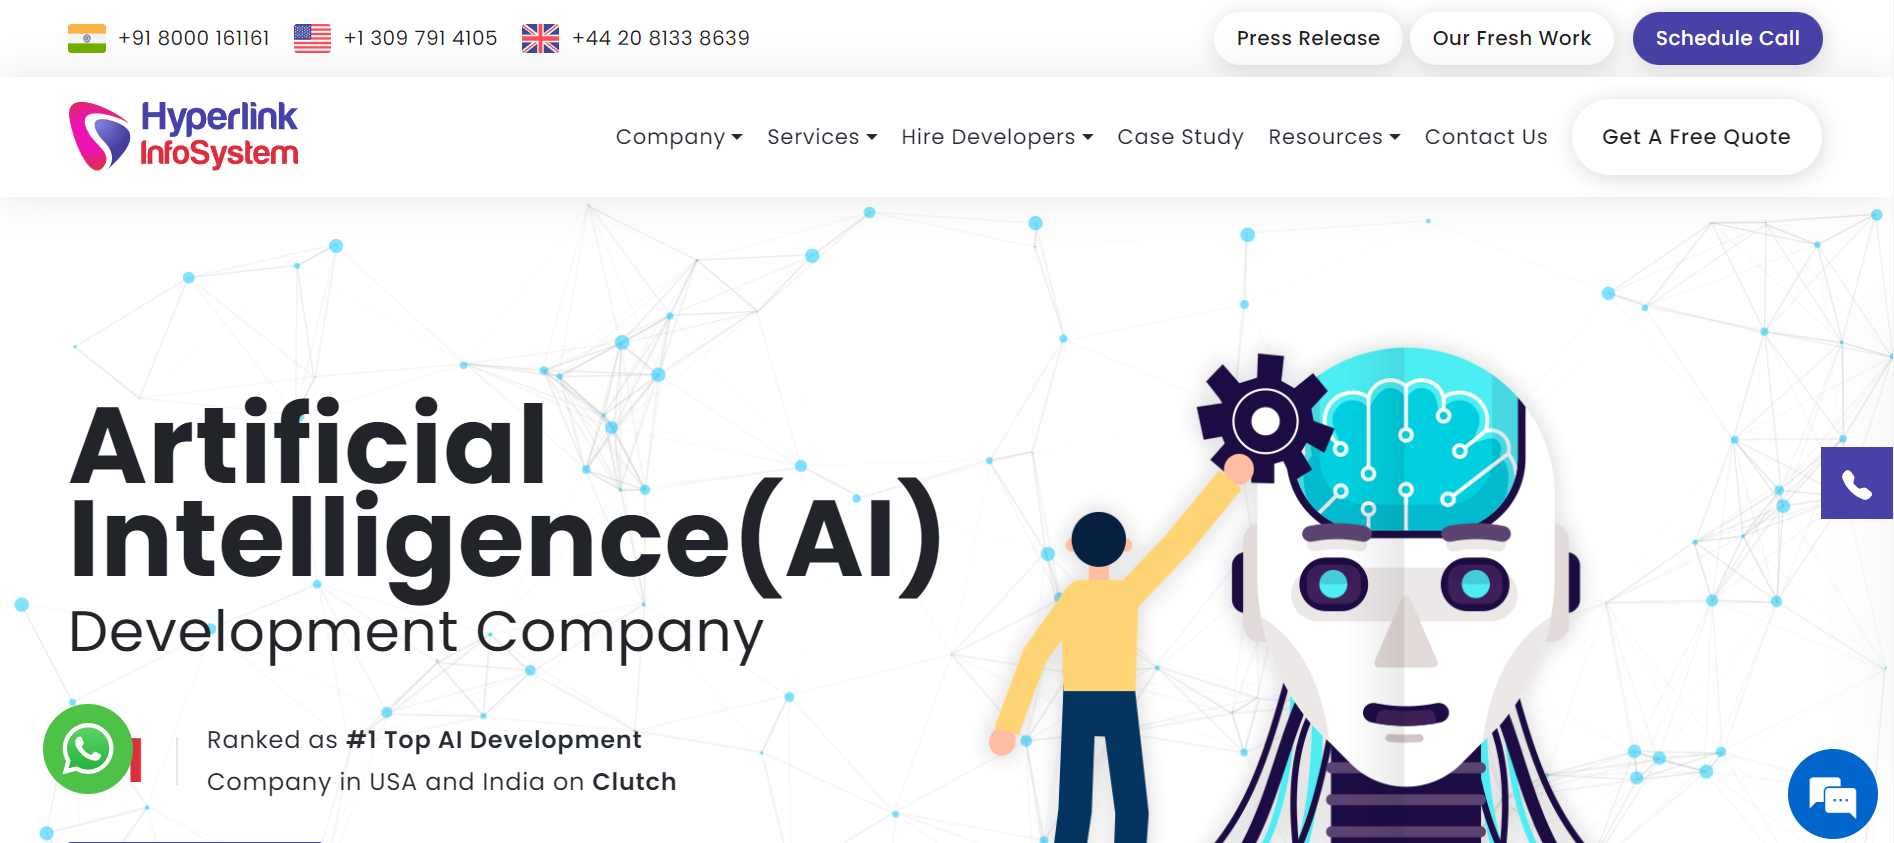 Hyperlink Infosystem homepage: Artificial Intelligence (AI) Development Company